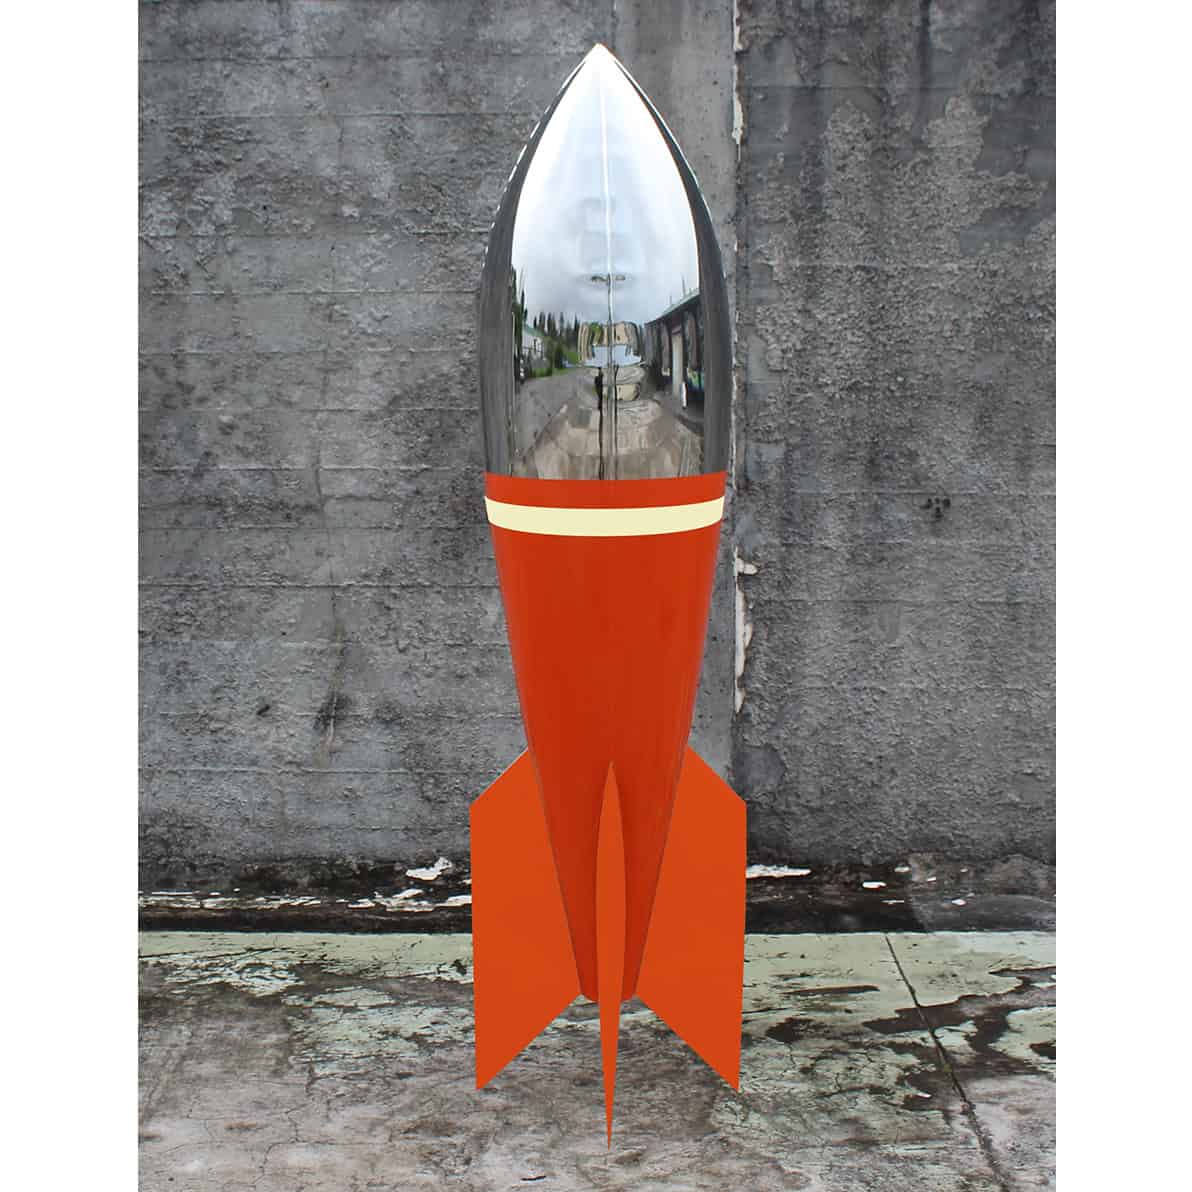 Orange-and-White-210cm-STAINLESS-STEEL-INDUSTRIAL-COATING-[stainless-steel,-free-standing,outdoor]david-mcCracken-rocket-sculpture-australian-artist-pop-art